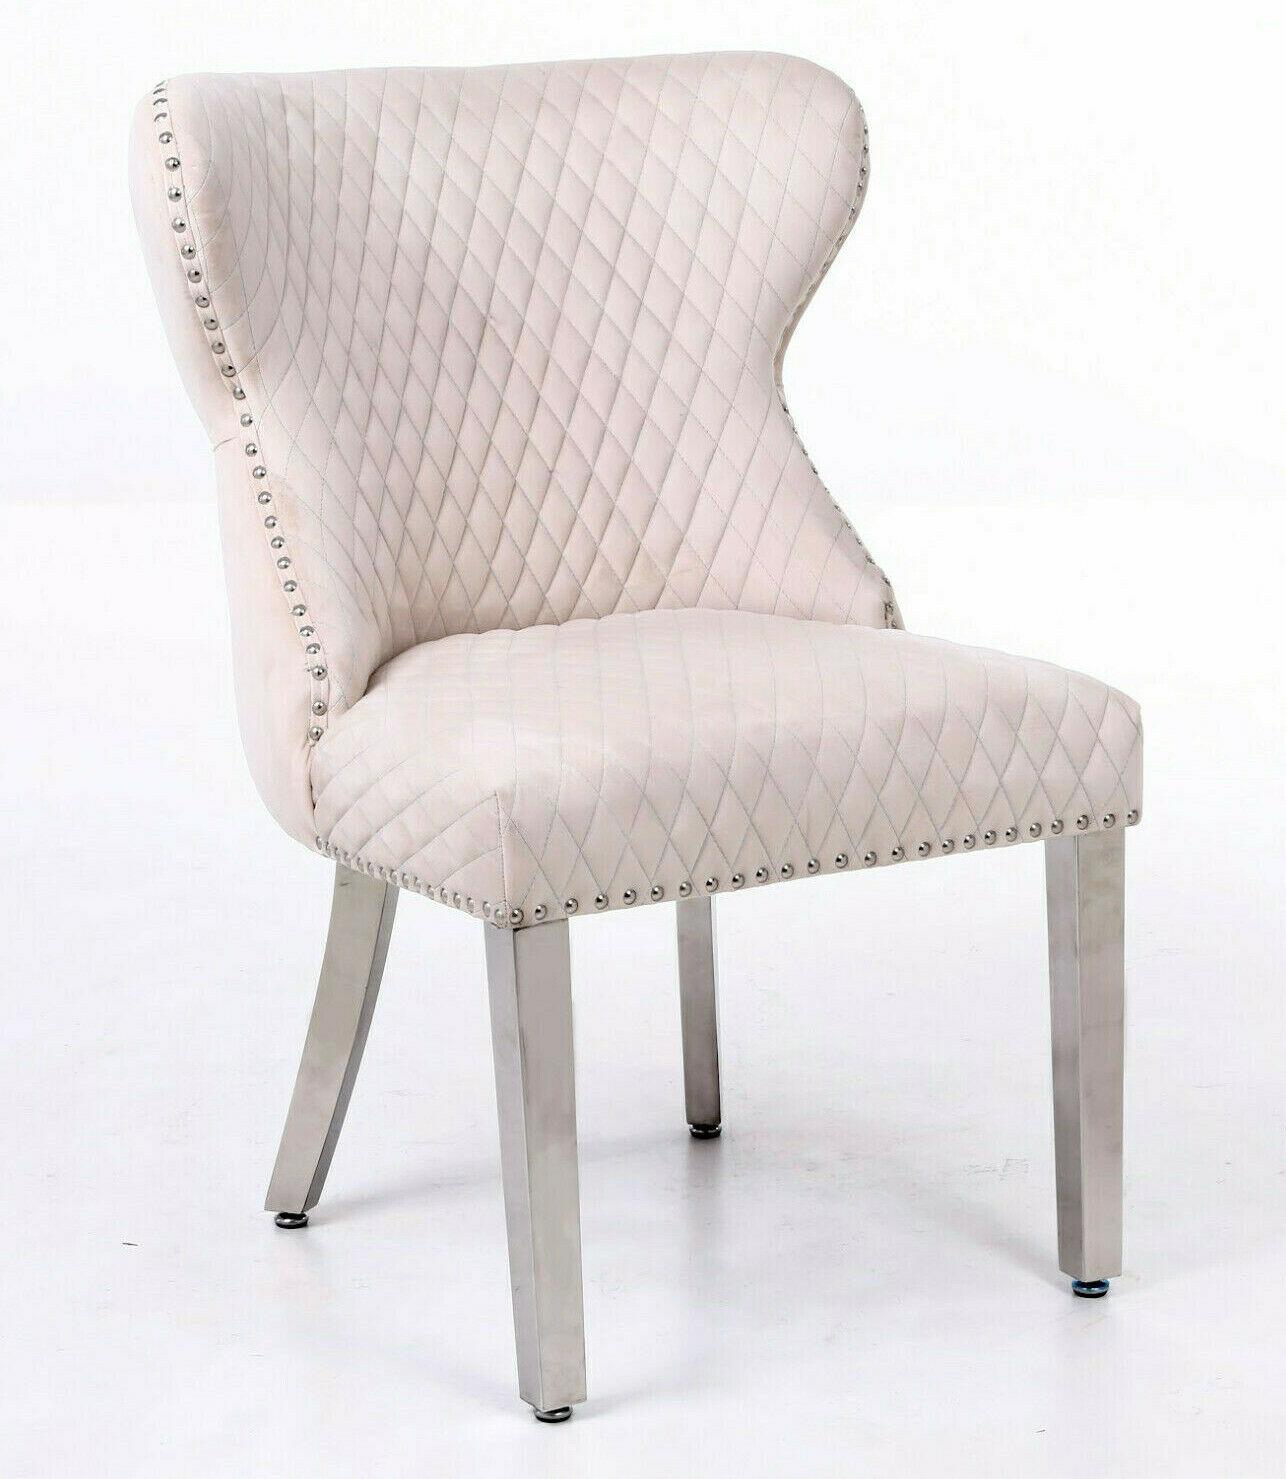 Louis 200cm Grey Marble Dining Table + Valentino Lion Knocker Velvet Chairs-Esme Furnishings